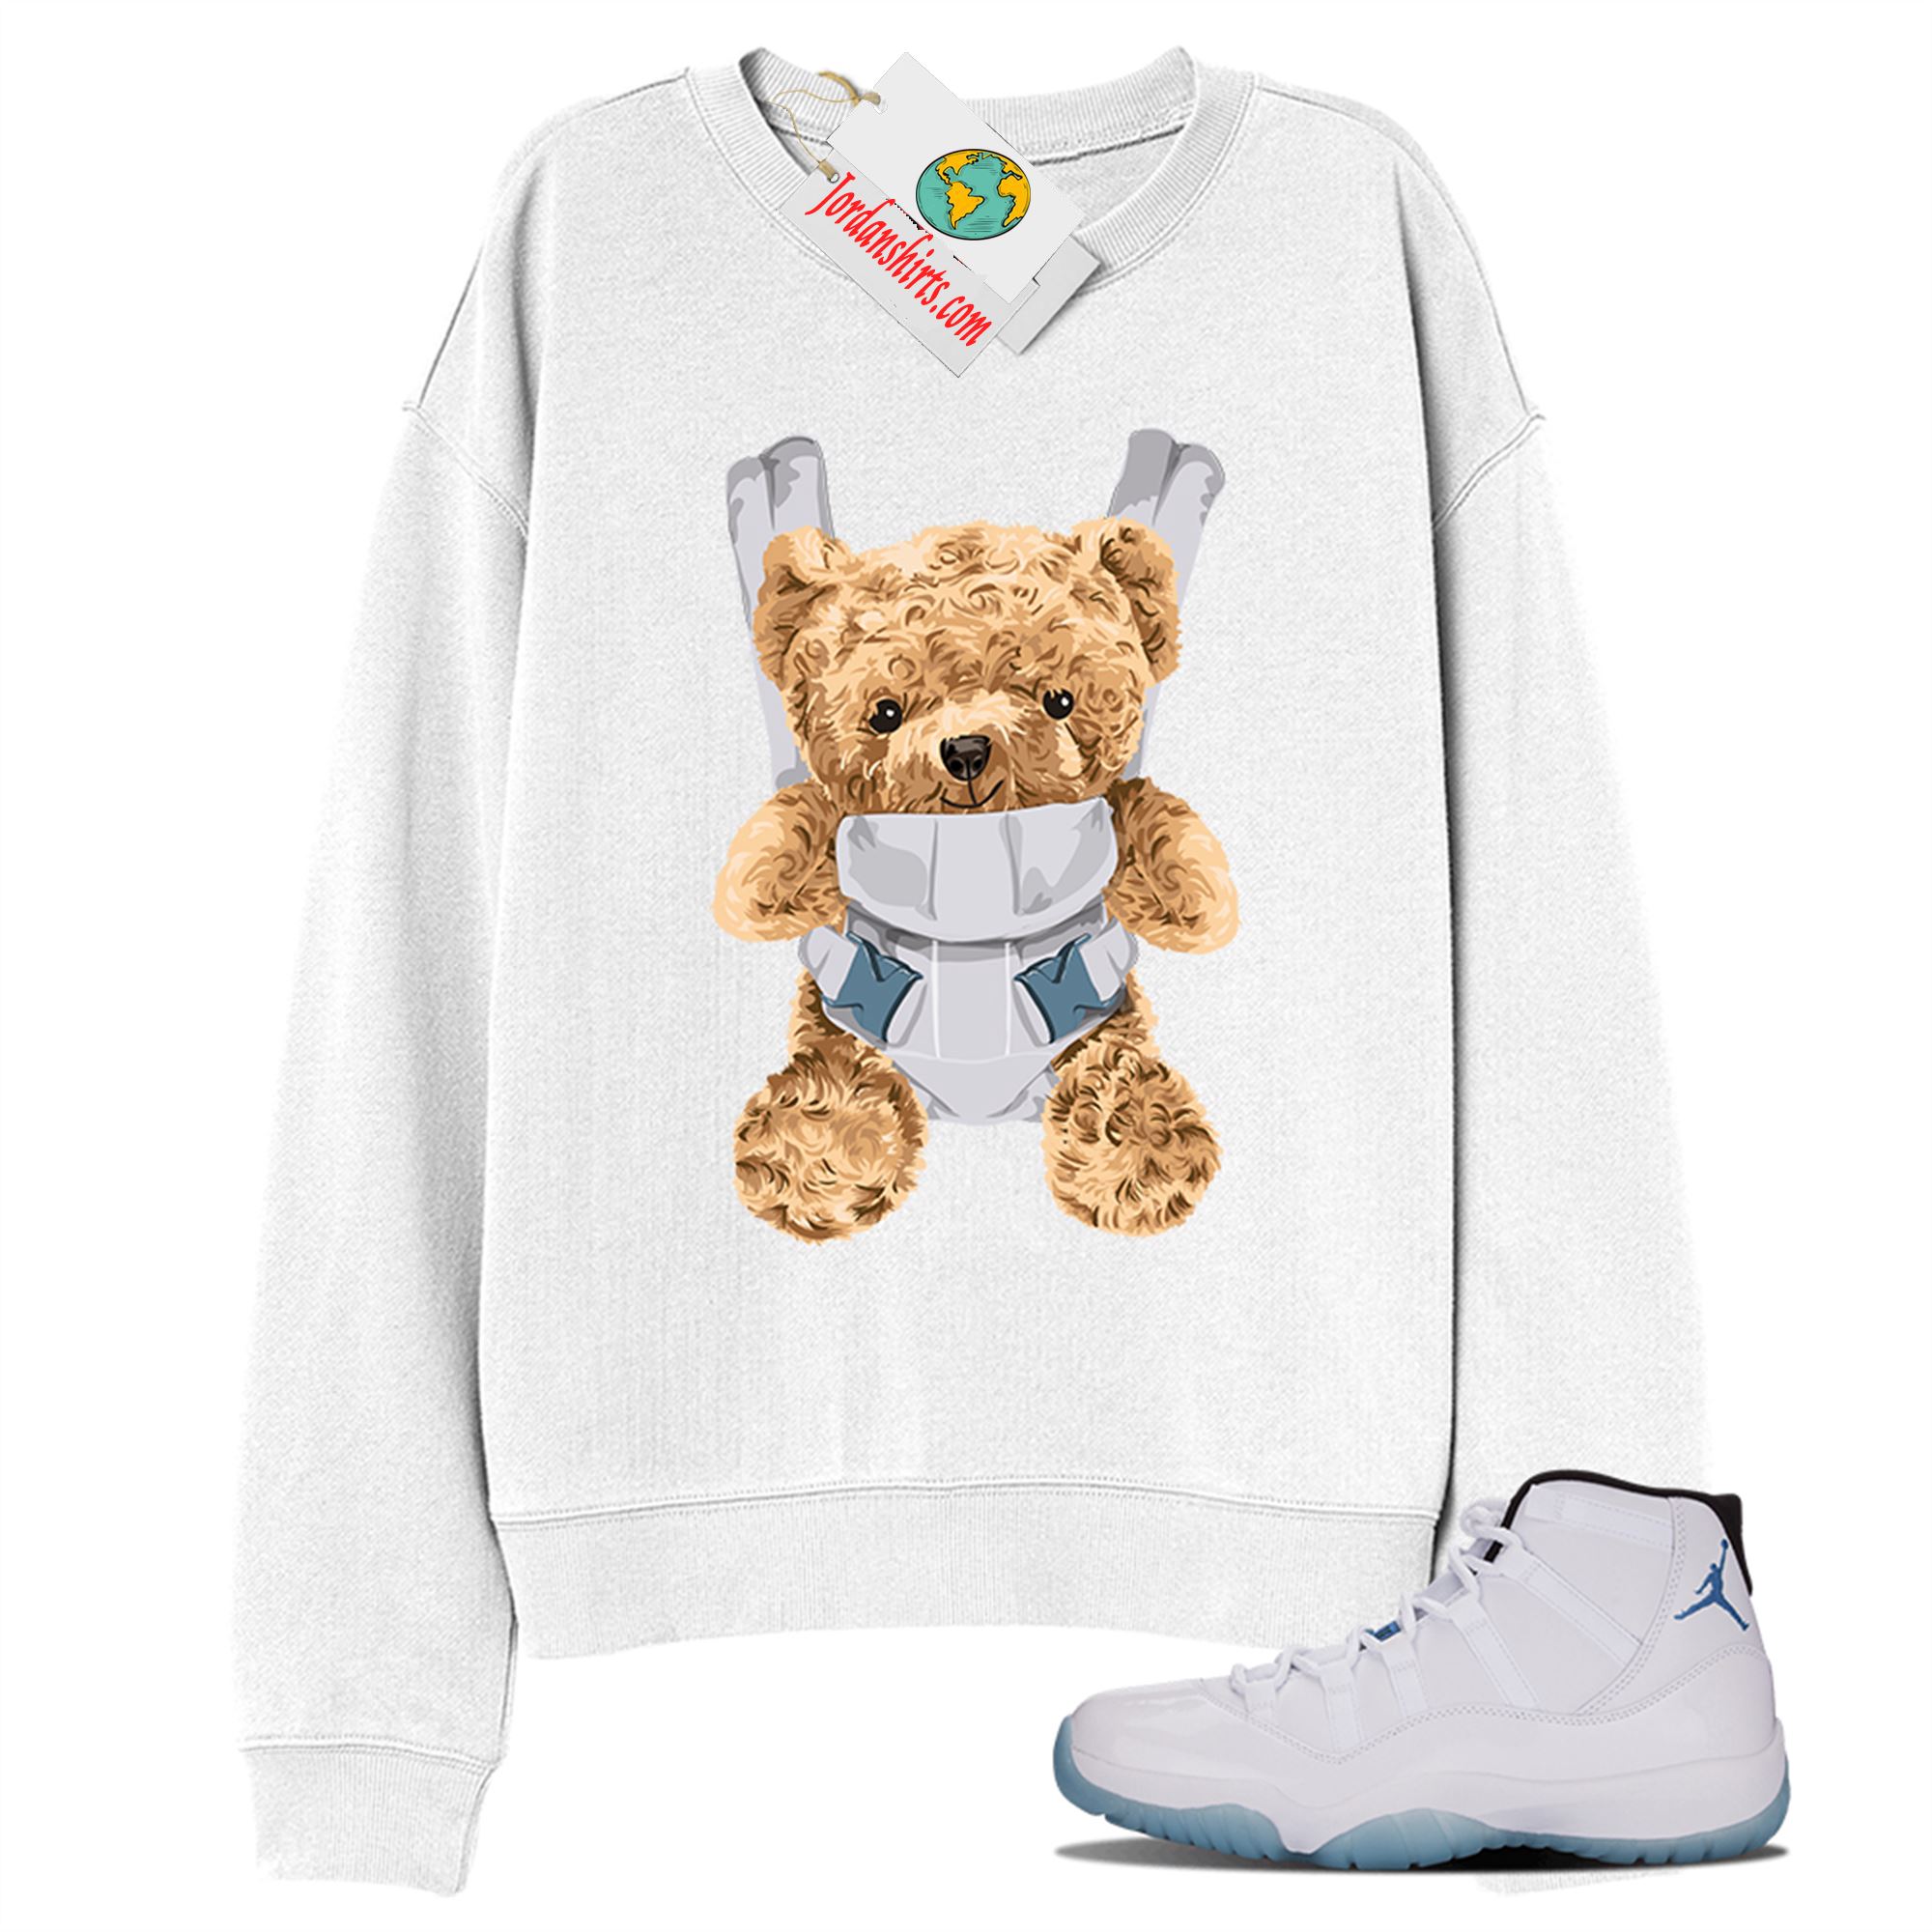 Jordan 11 Sweatshirt, Teddy Bear Bag White Sweatshirt Air Jordan 11 Legend Blue 11s Full Size Up To 5xl